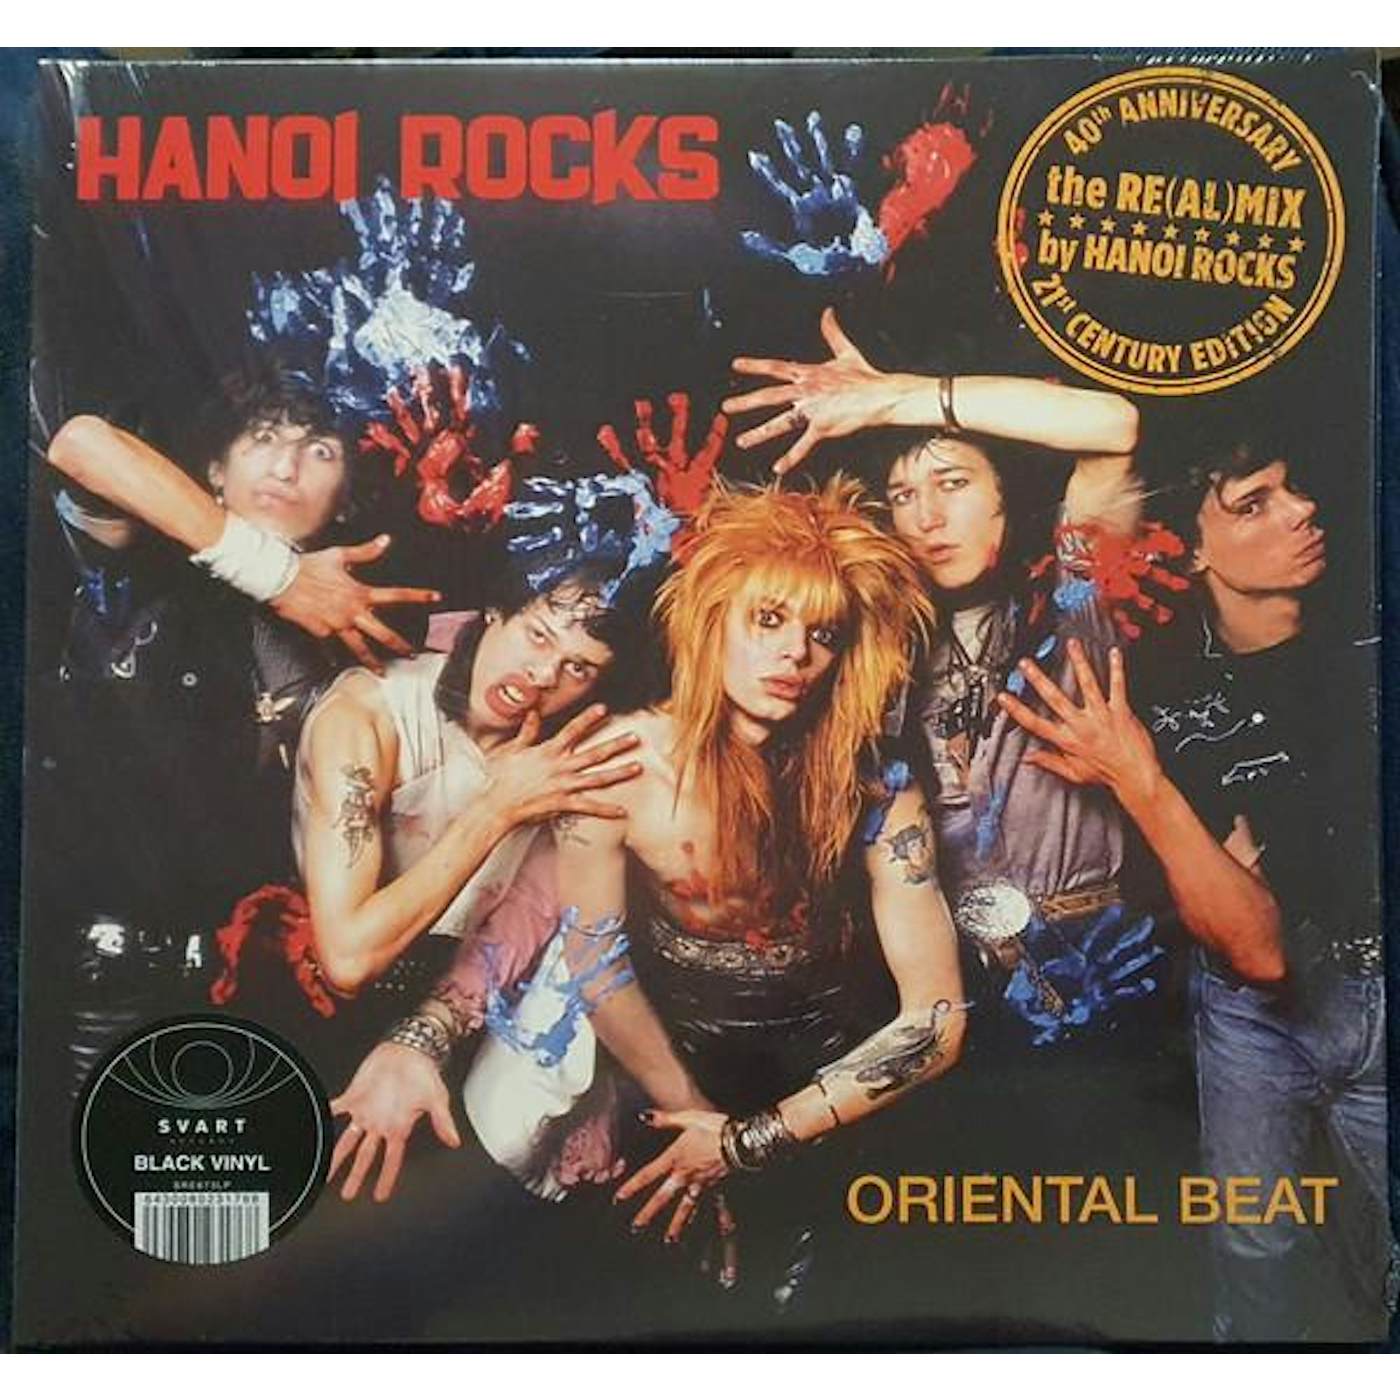 Hanoi Rocks Oriental Beat Vinyl Record